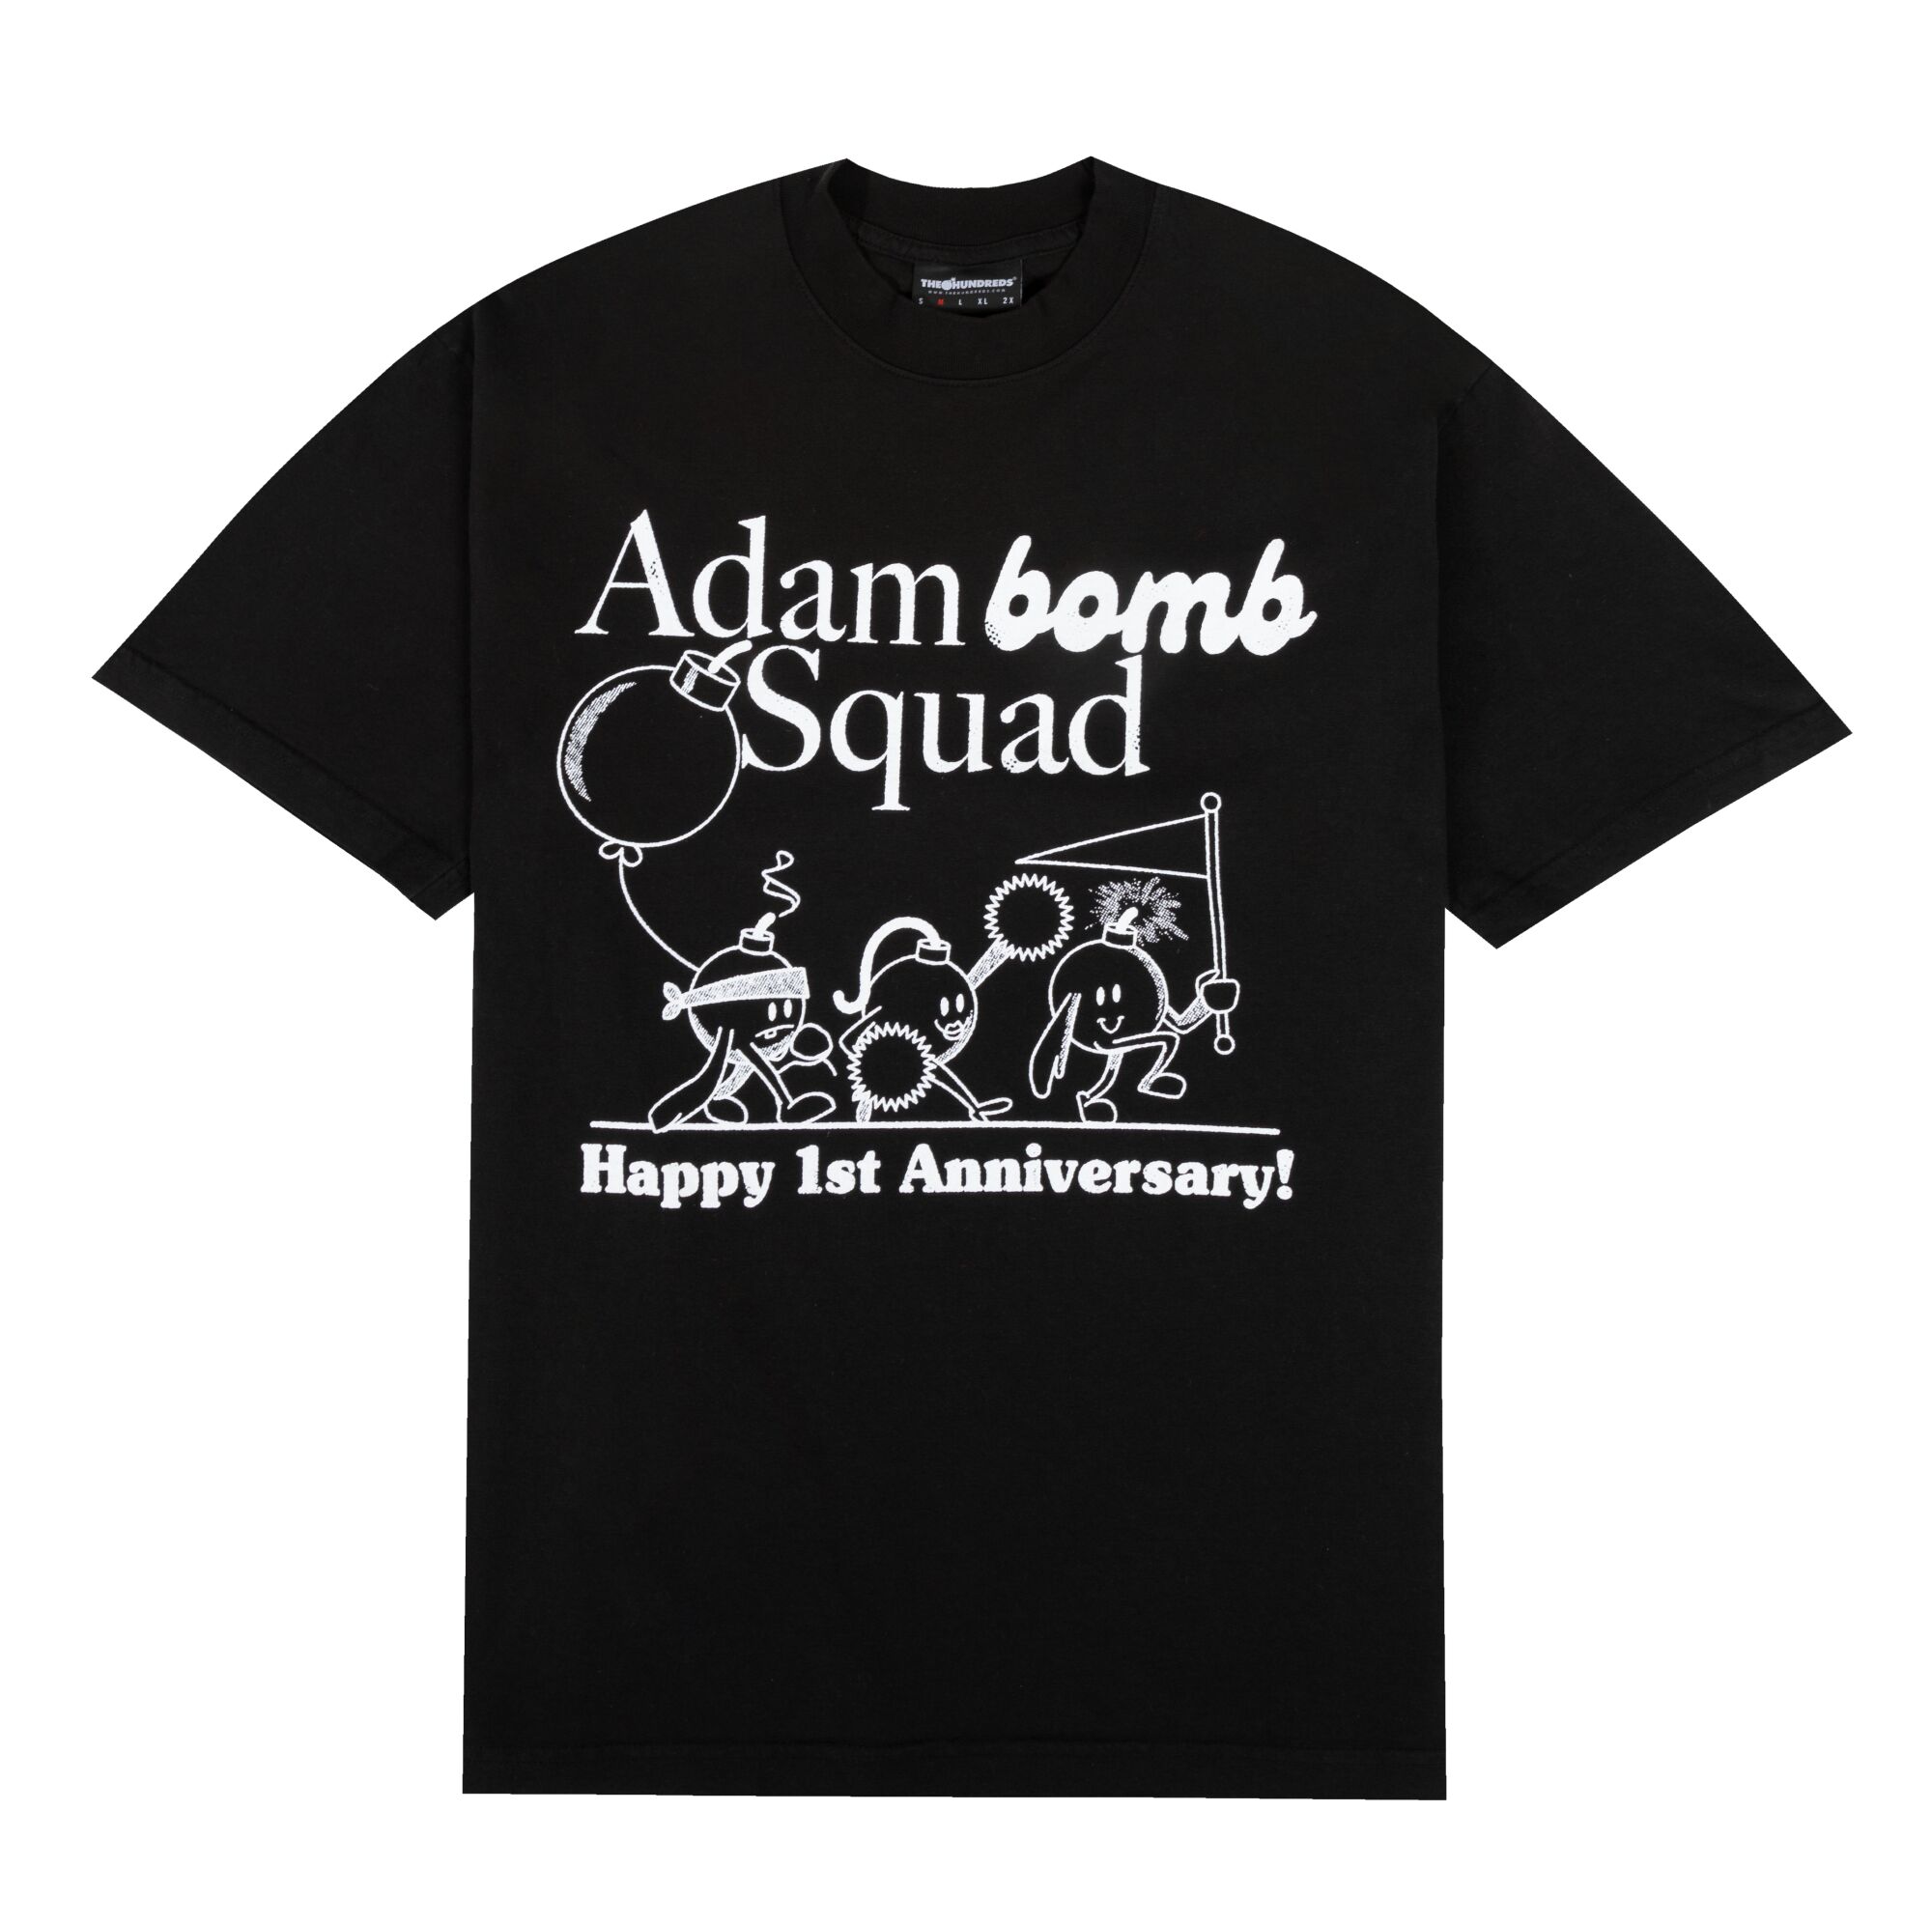 Black T-shirt reading, "Adam bomb Squad"